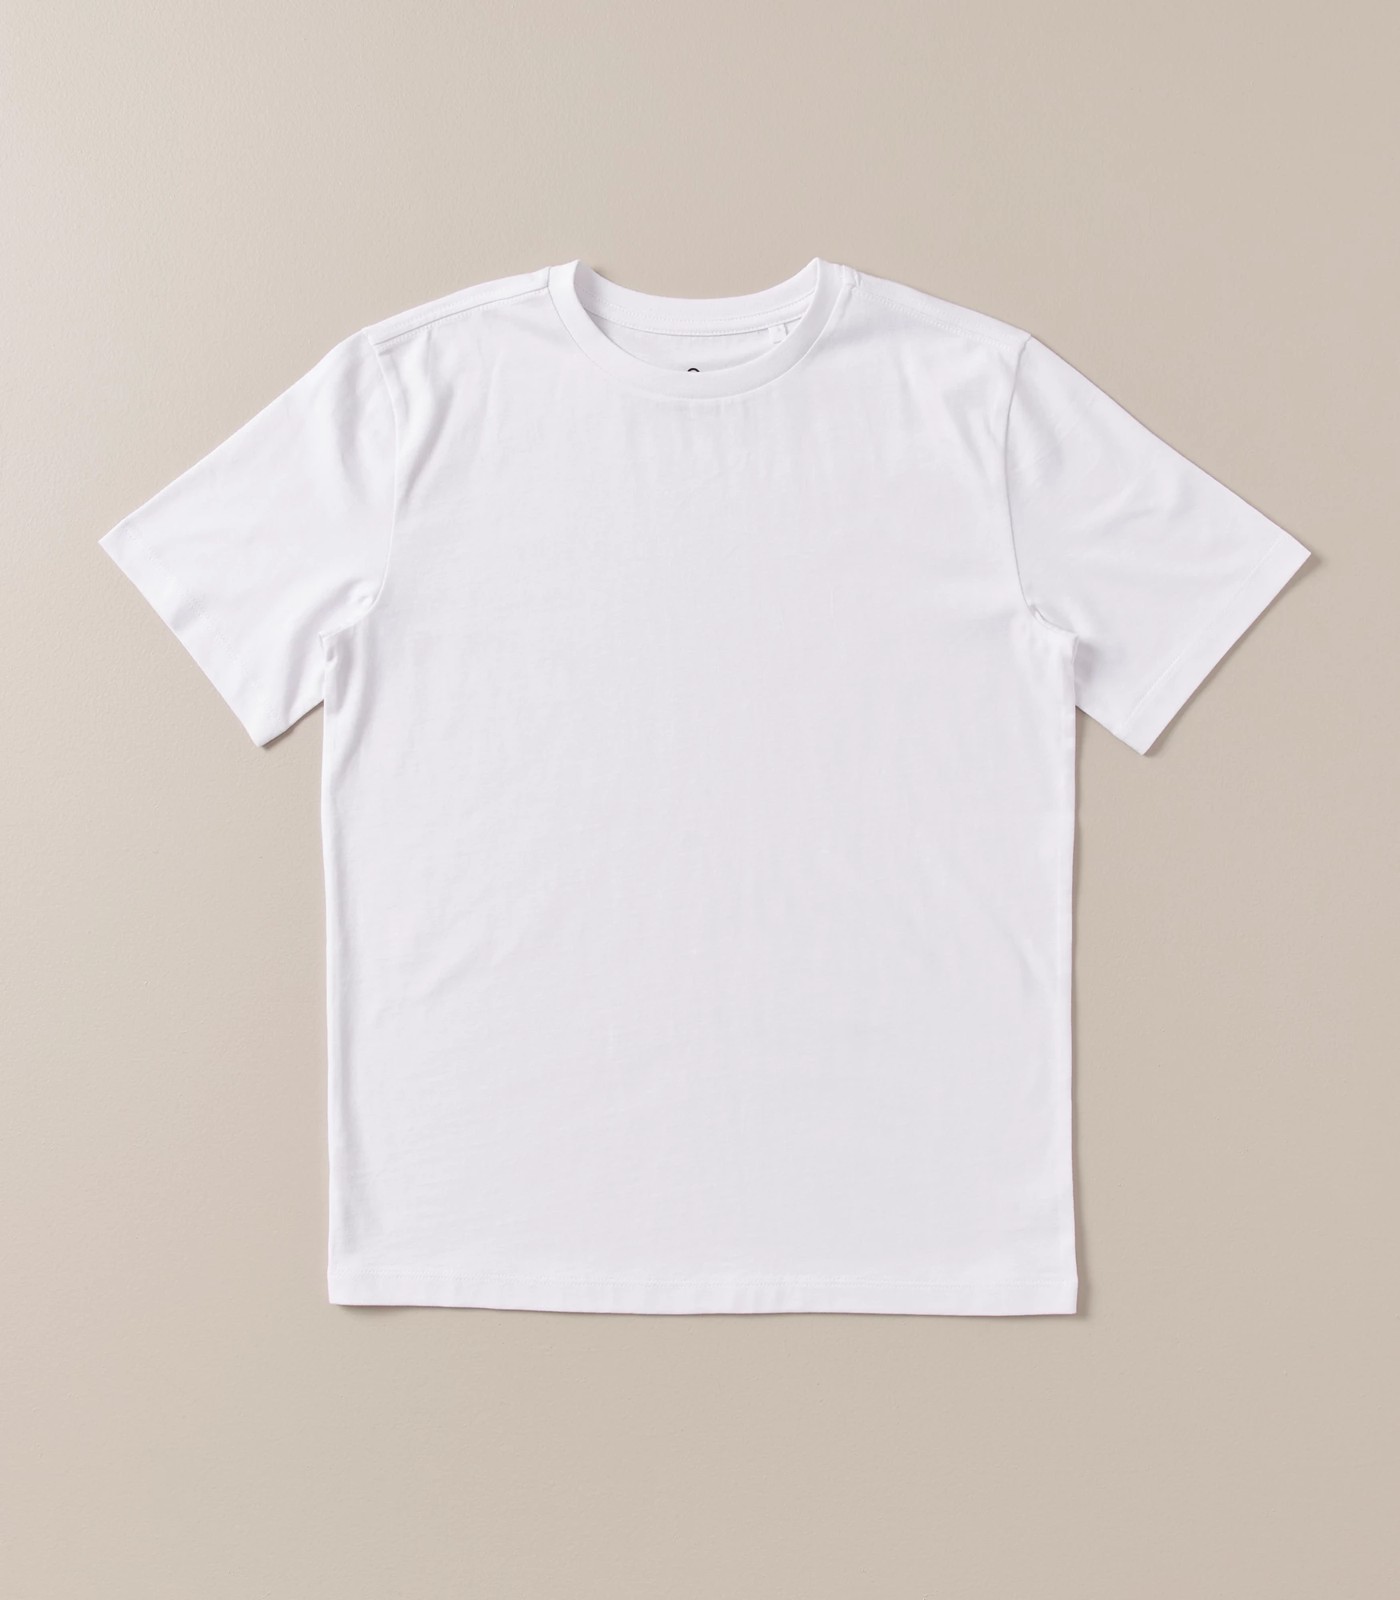 Boys T-shirts 2 Pack - White | Target Australia